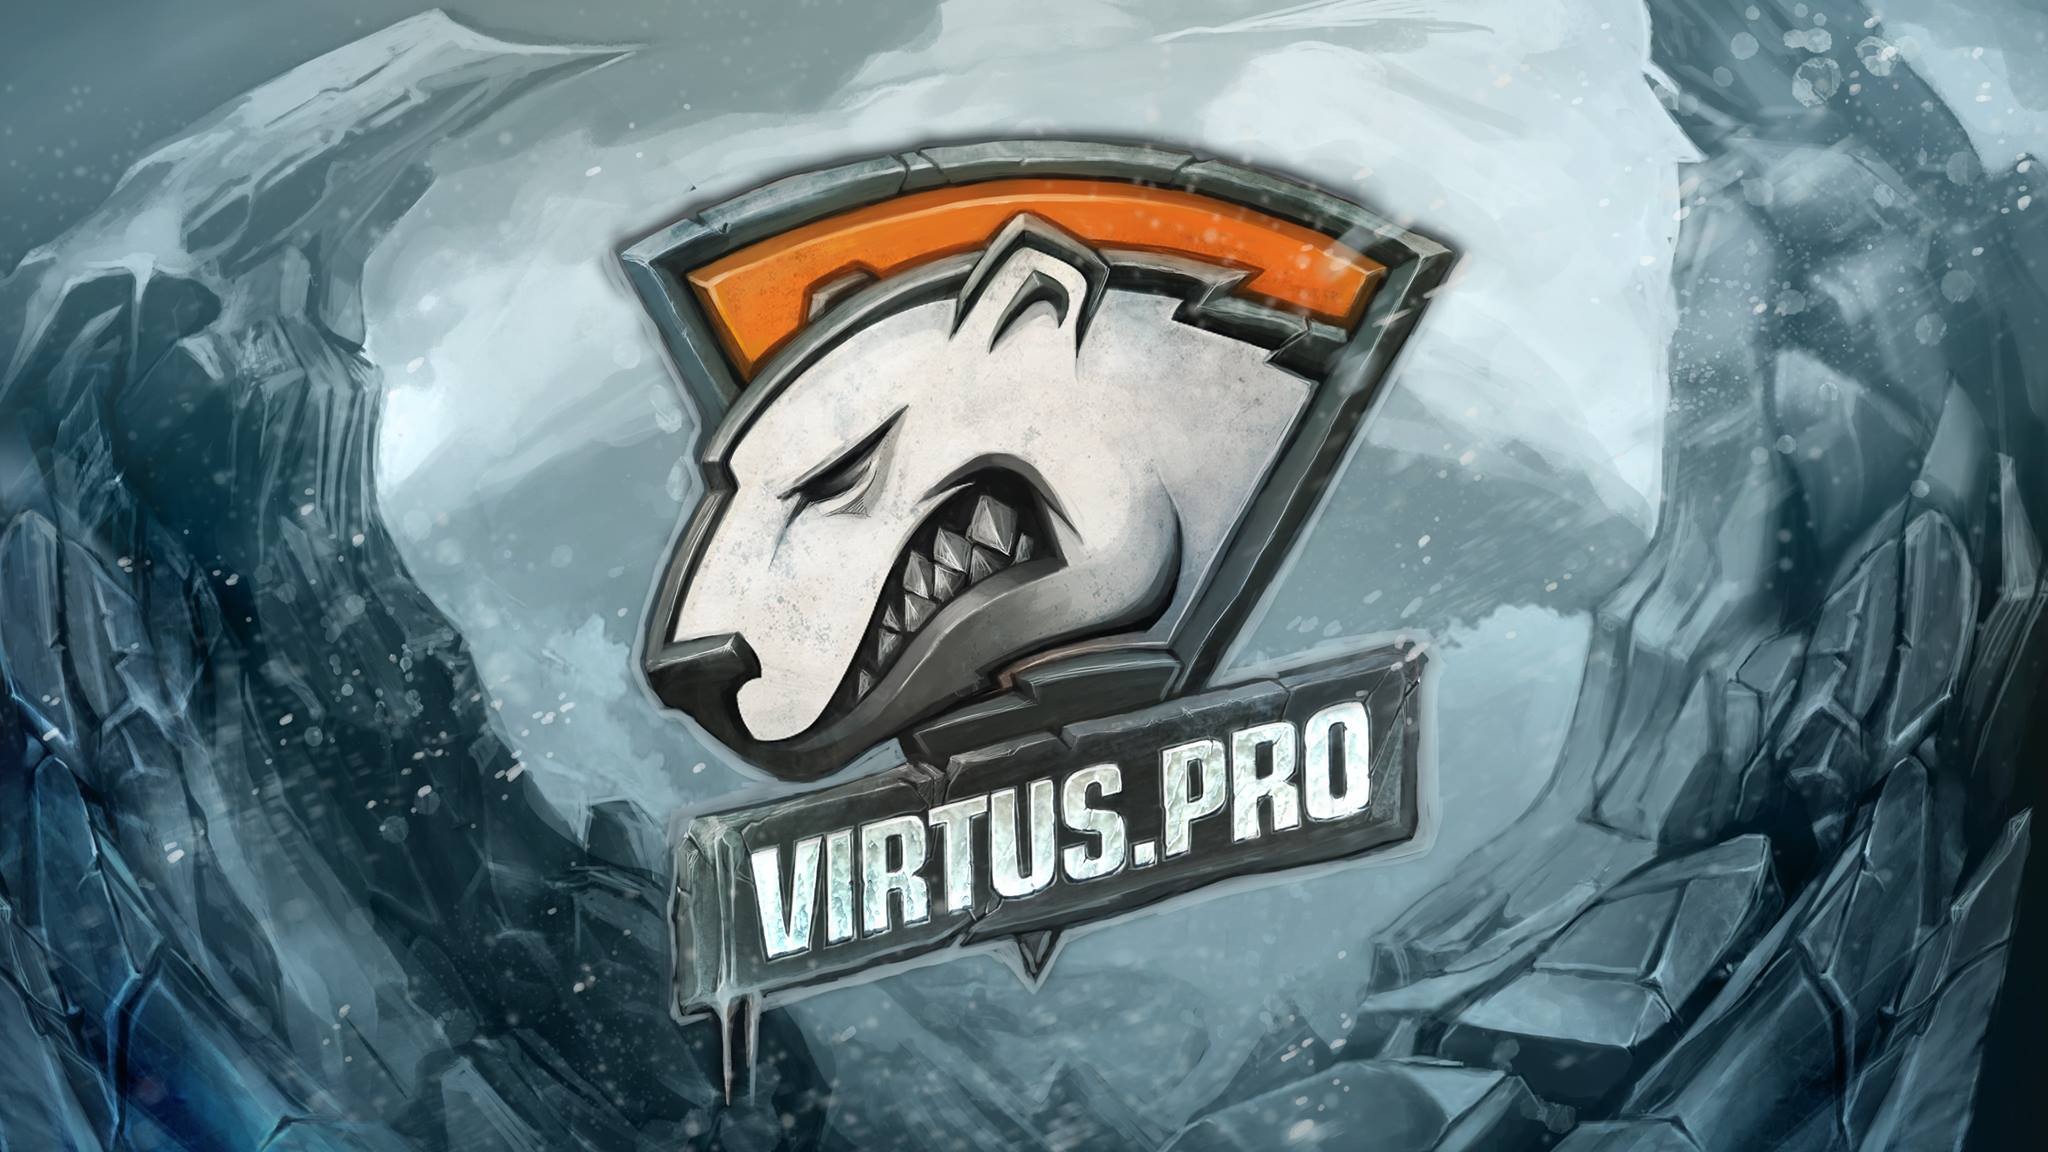 General 2048x1152 Counter-Strike: Global Offensive Virtus.pro PC gaming logo e-sports